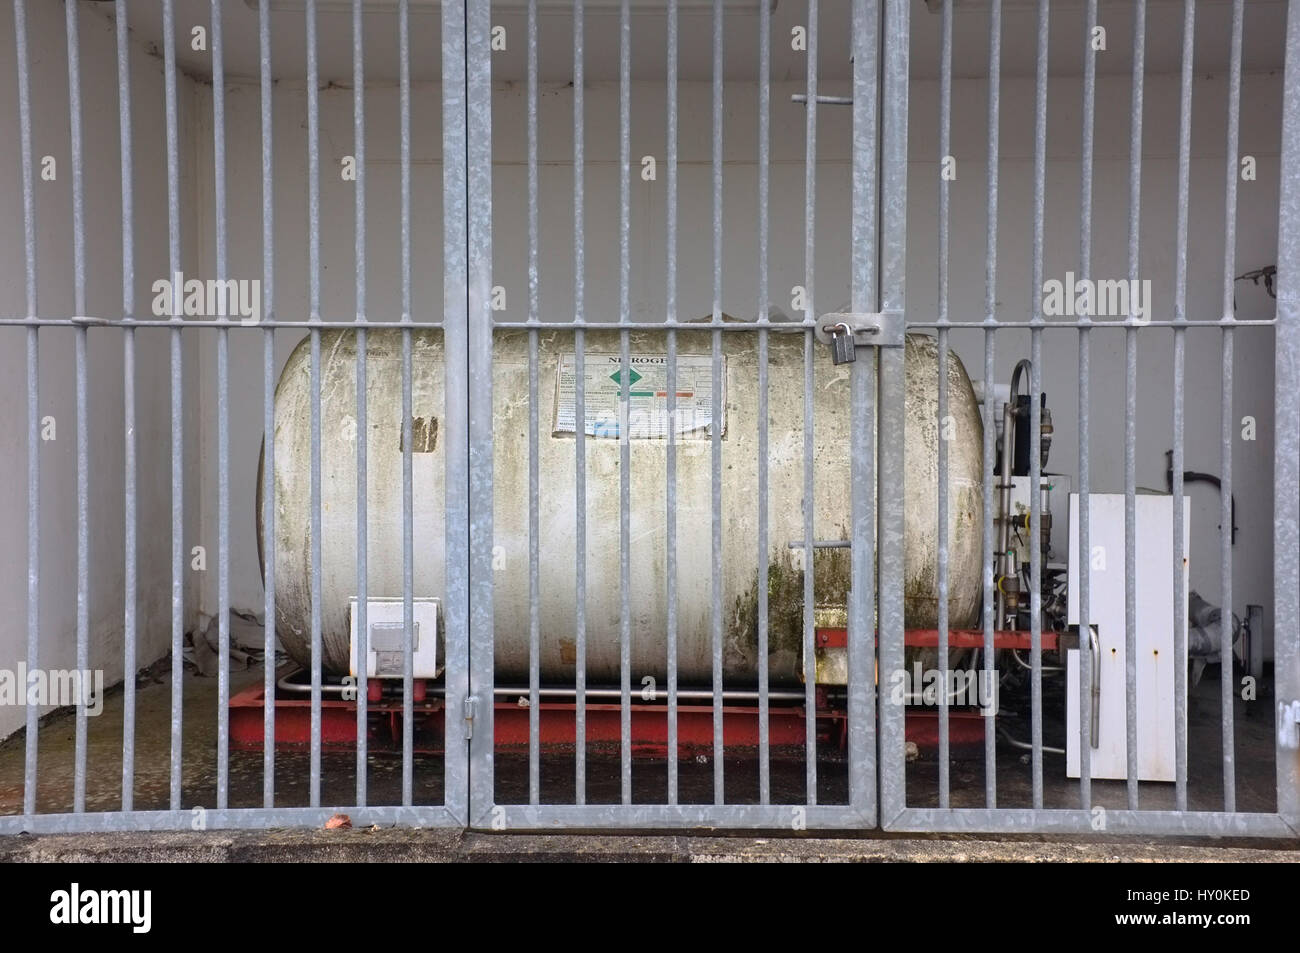 A Nitrogen cylinder behind safety bars. Stock Photo